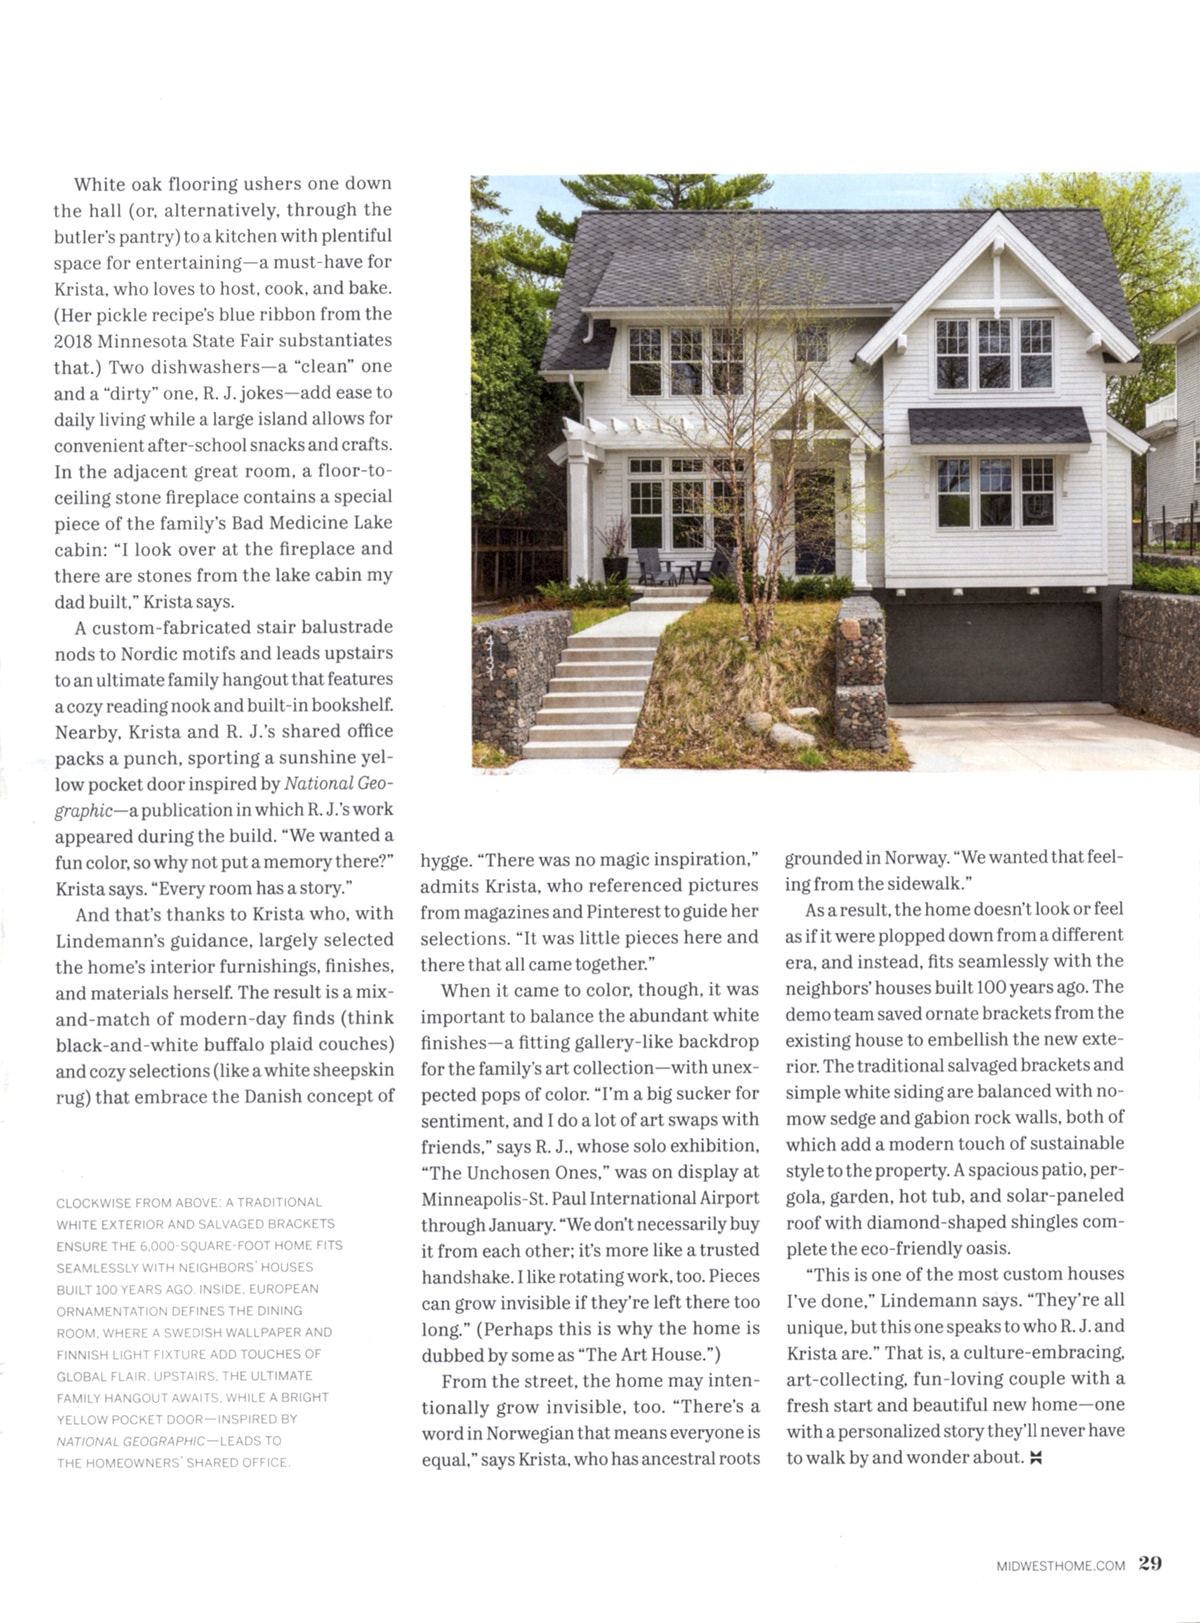 MWH Home Design Article